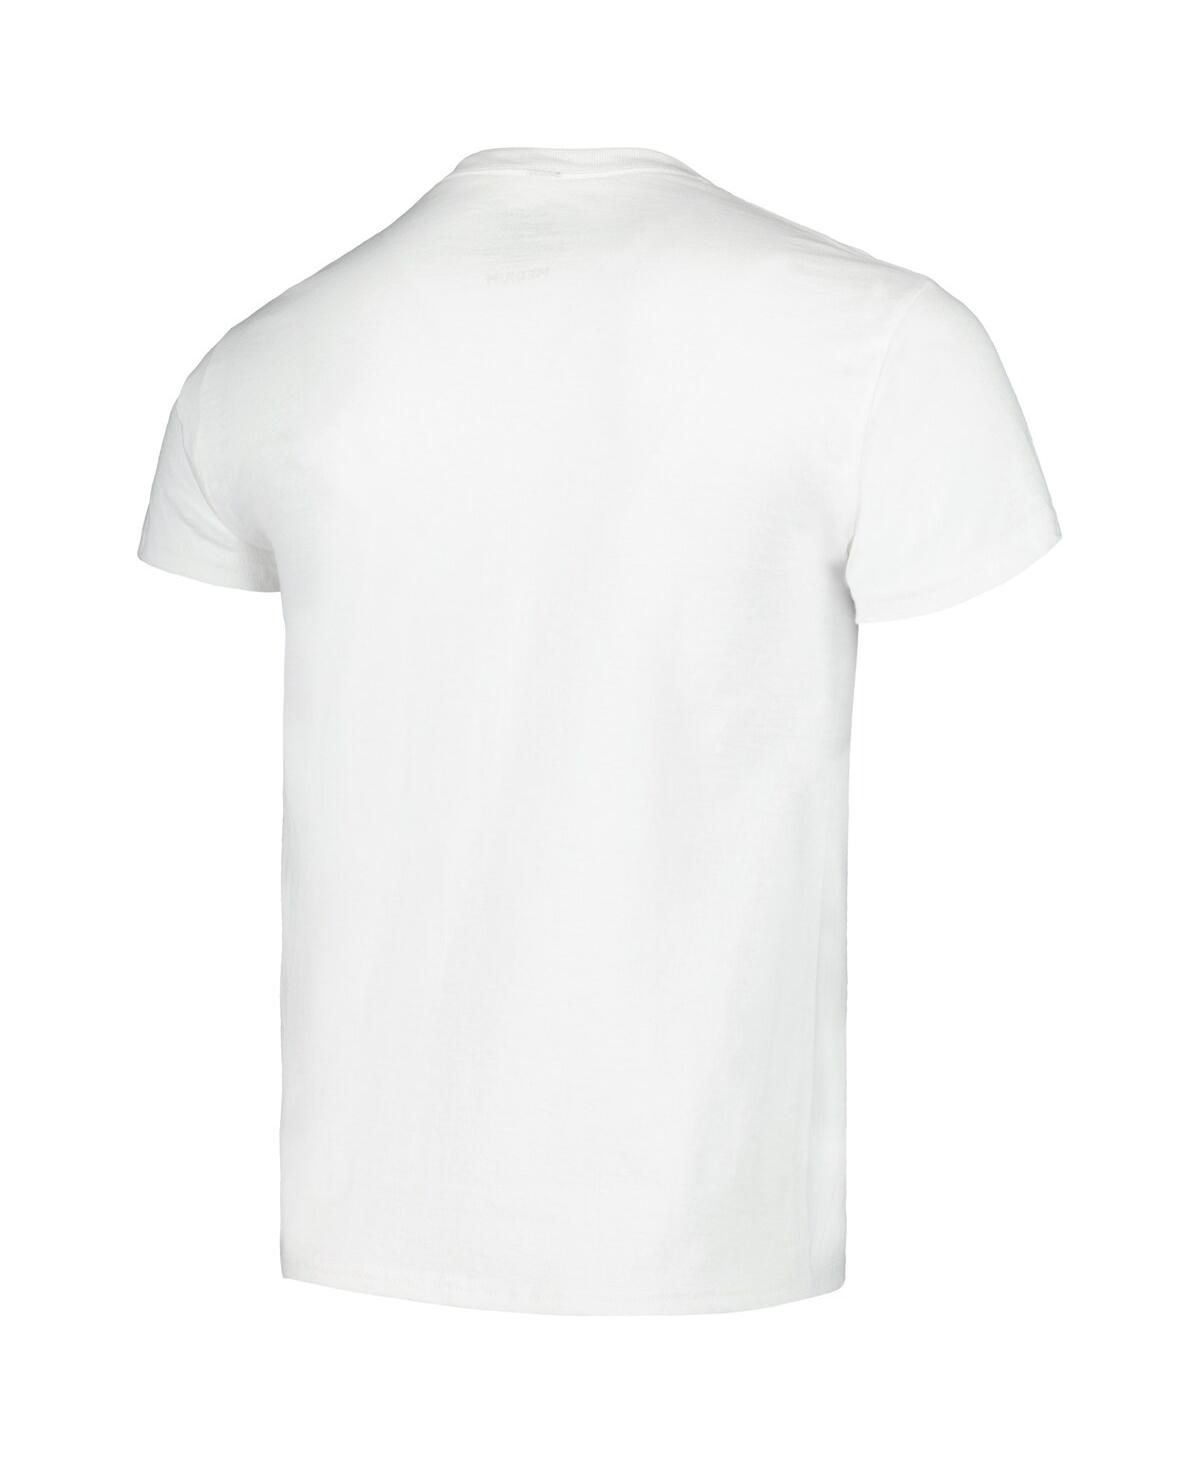 Shop Manhead Merch Men's White Alice In Chains Seattle Stamp T-shirt